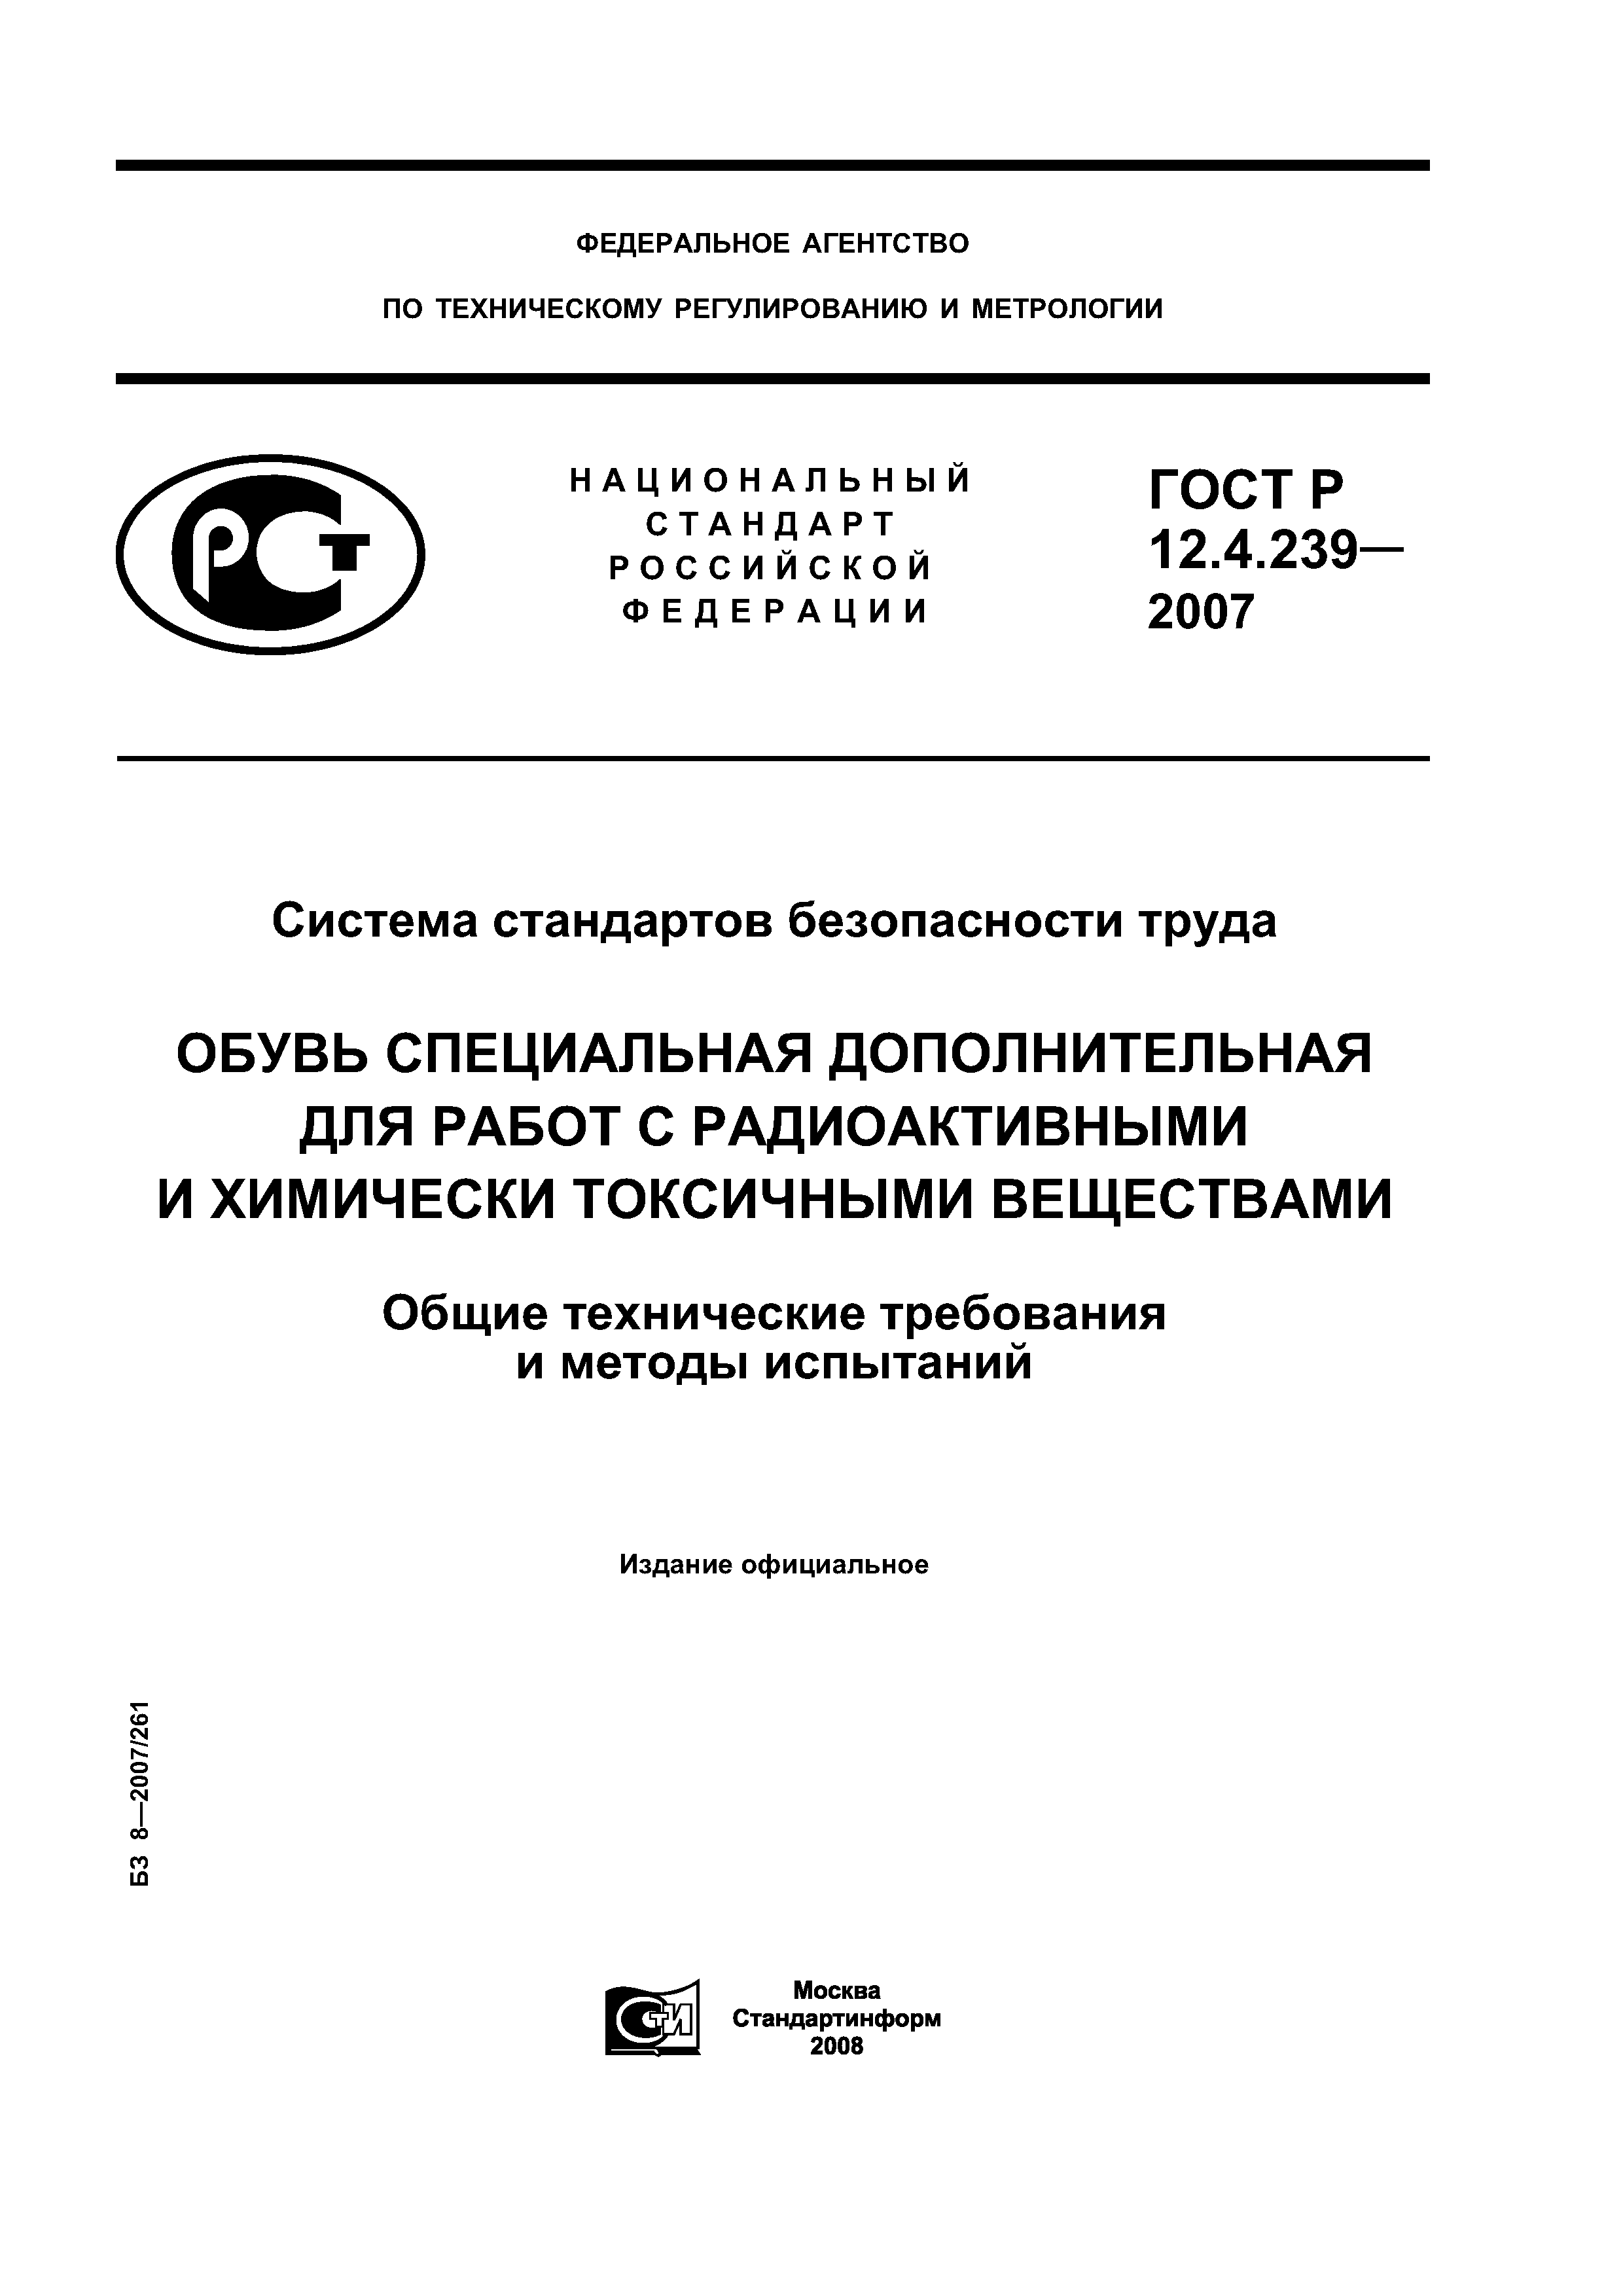 ГОСТ Р 12.4.239-2007